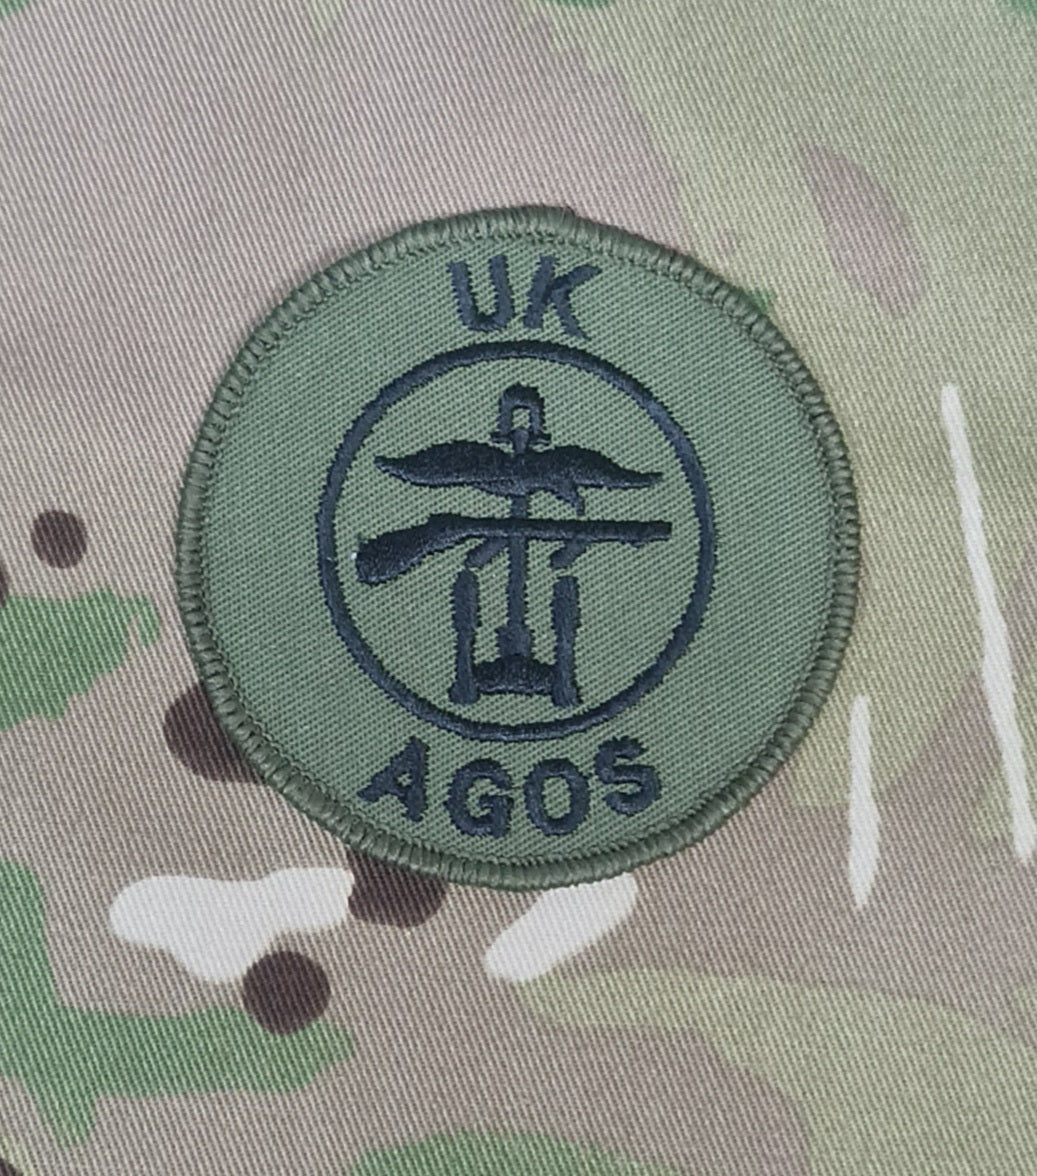 United Kingdom Air Ground Integration School (UKAGOS) Circular Unit Recognition Patch